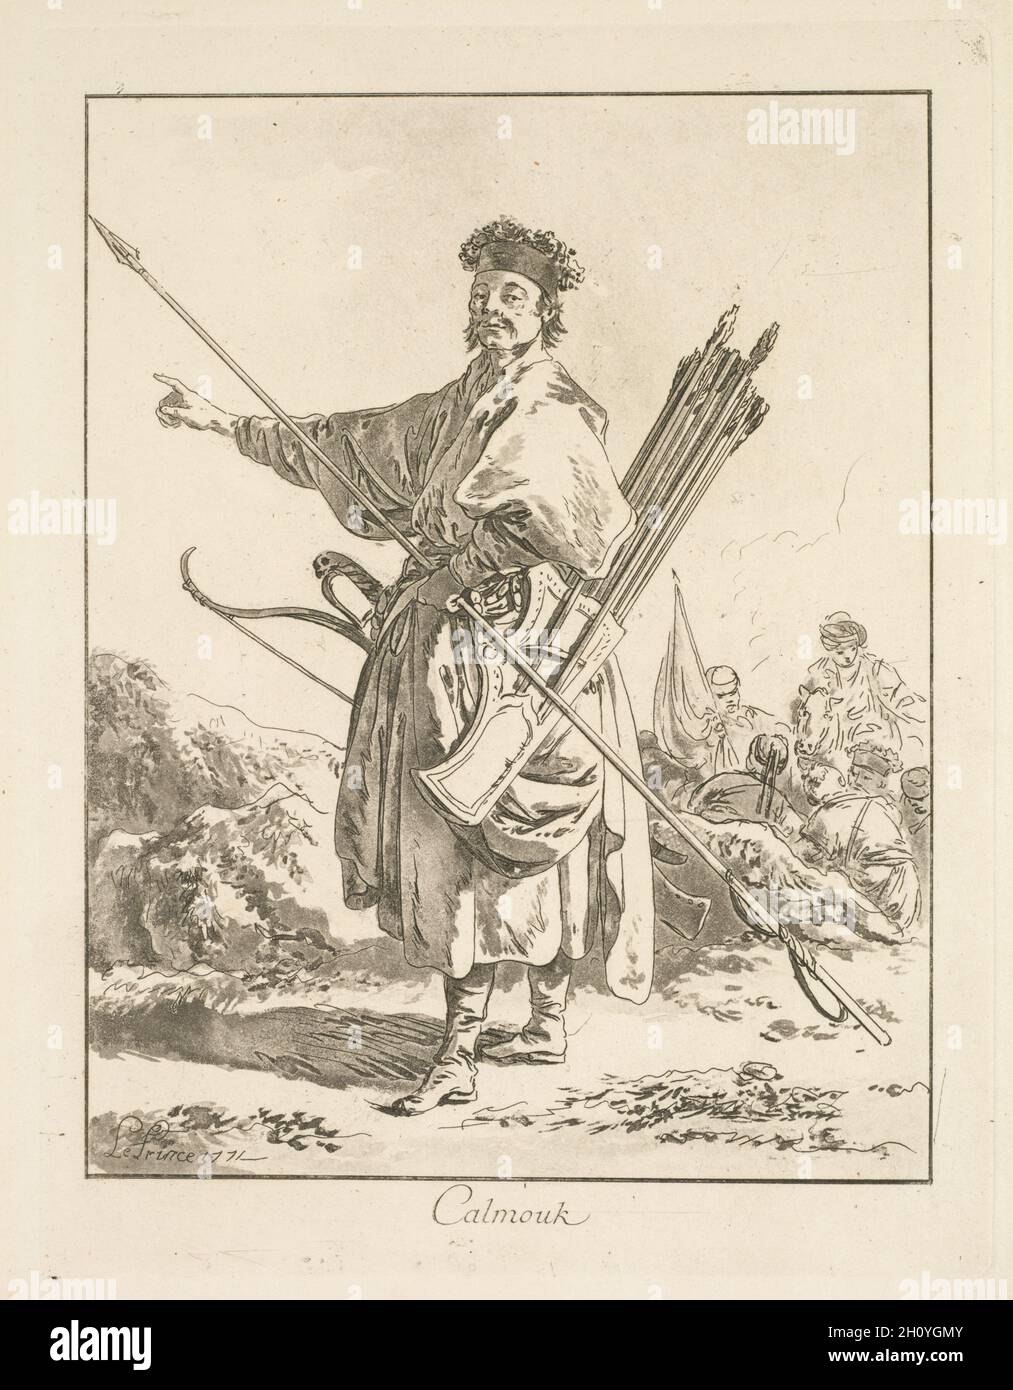 Calmouk, 1771. Jean Baptiste Le Prince (francés, 1734-1781). Aguafuerte y aguatinta; hoja: 28,9 x 20,8 cm (11 3/8 x 8 3/16 pulg.); marca de plato: 24,1 x 18,4 cm (9 1/2 x 7 1/4 pulg.). Foto de stock